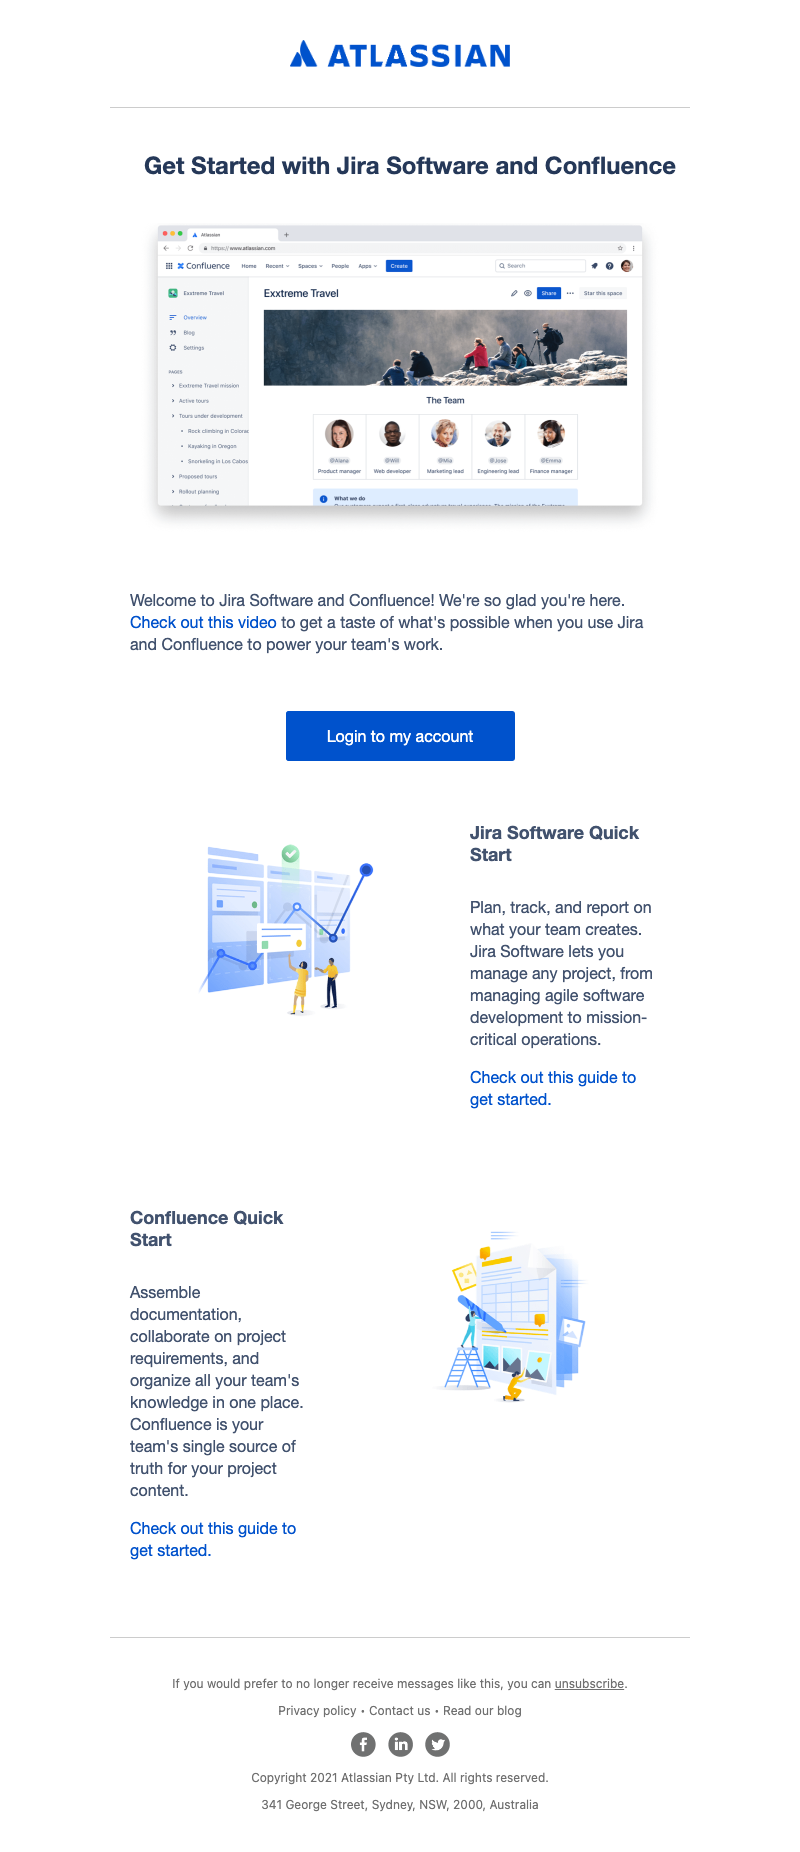 Welcome to Atlassian, Jake Hall!